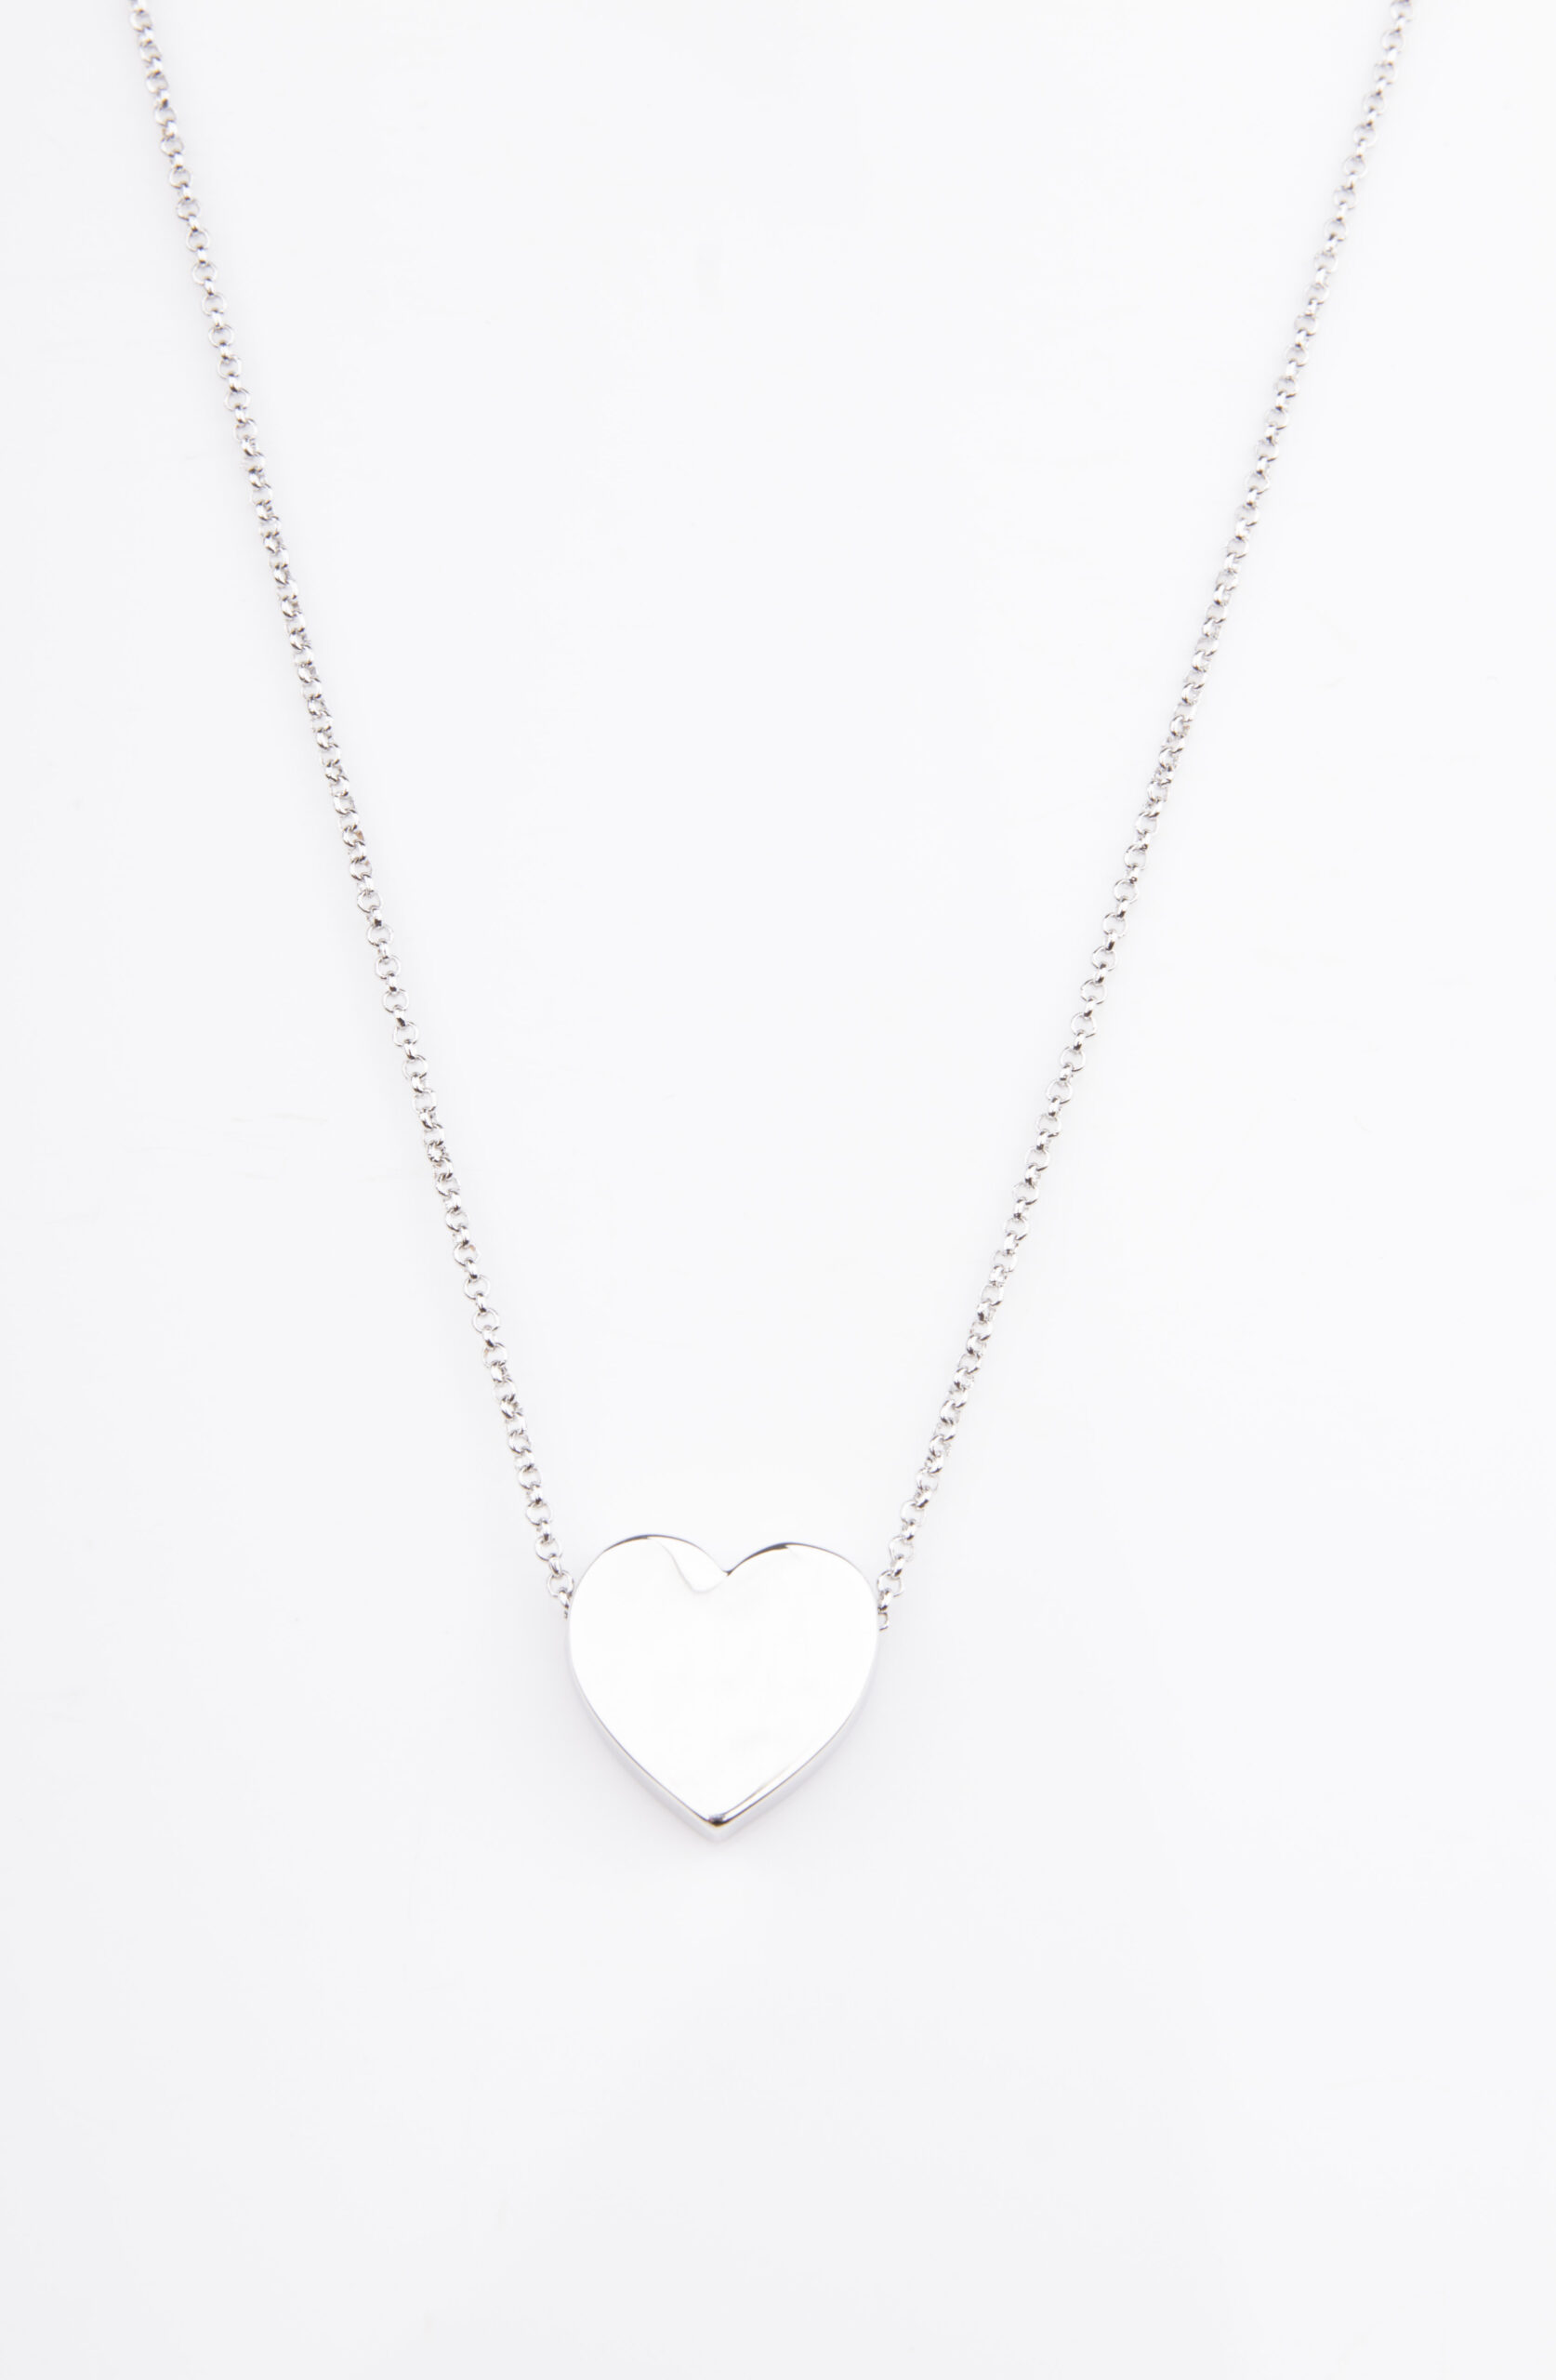 Heart Silver Necklace - Jane McKenzie Jewellery